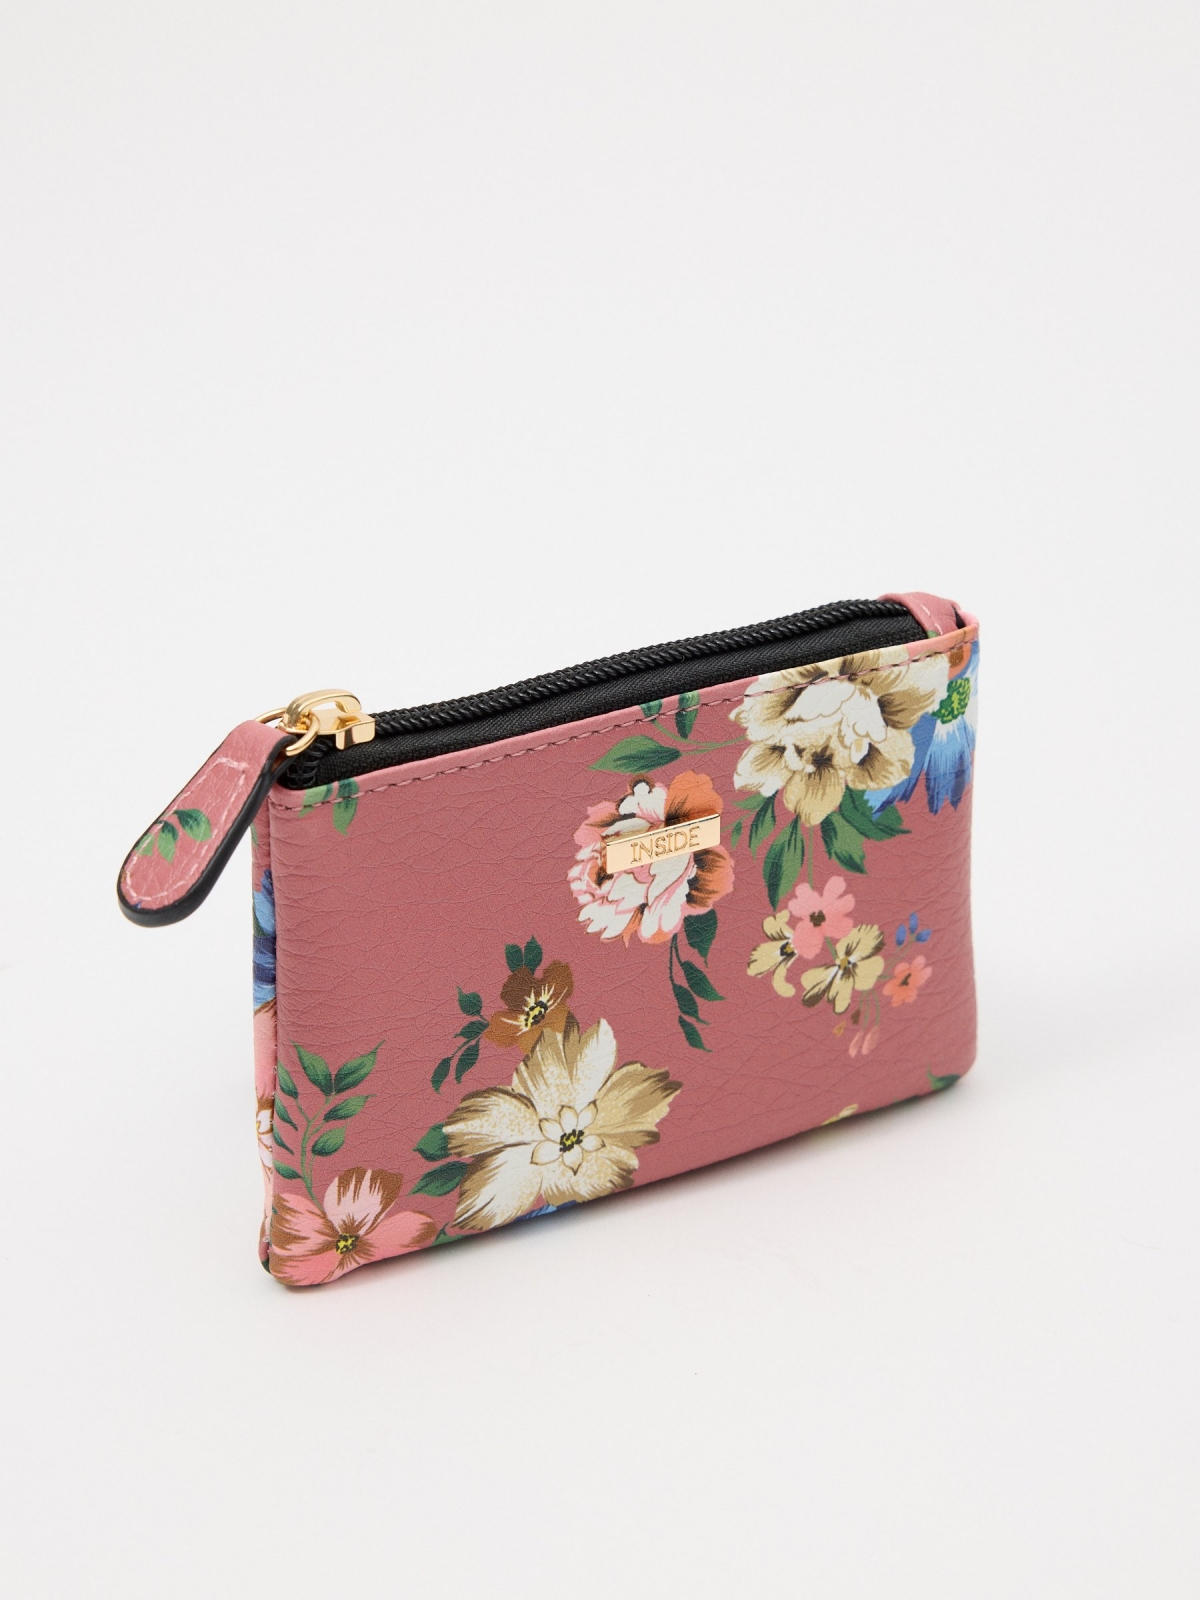 Flower print wallet pink back view